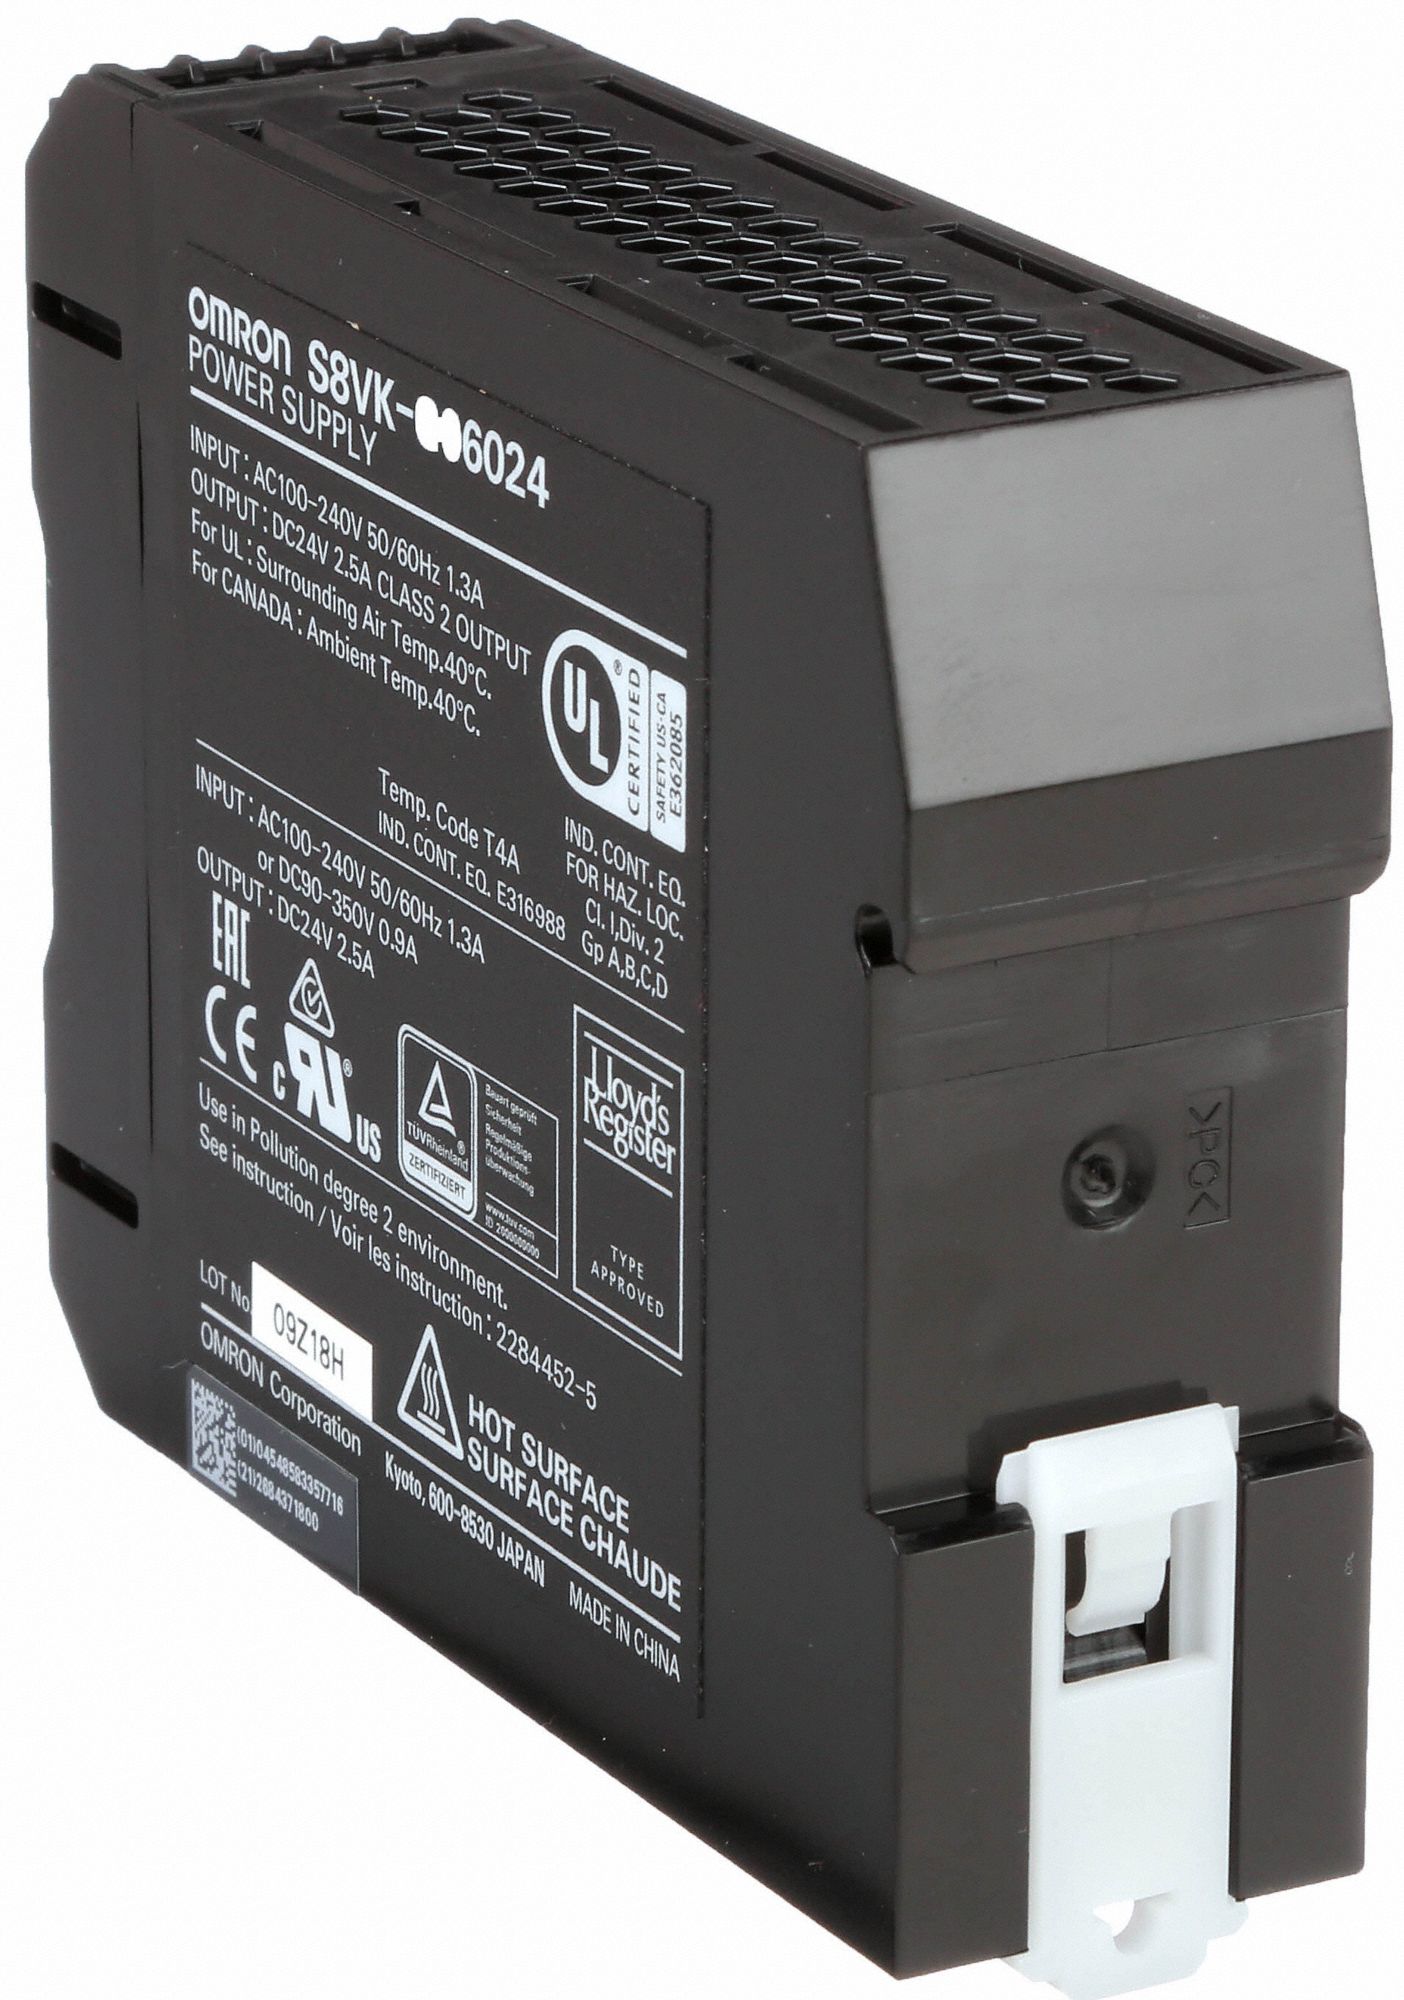 Omron S8vk-G06024 Dc Power Supply,24Vdc,2.5A,50/60Hz